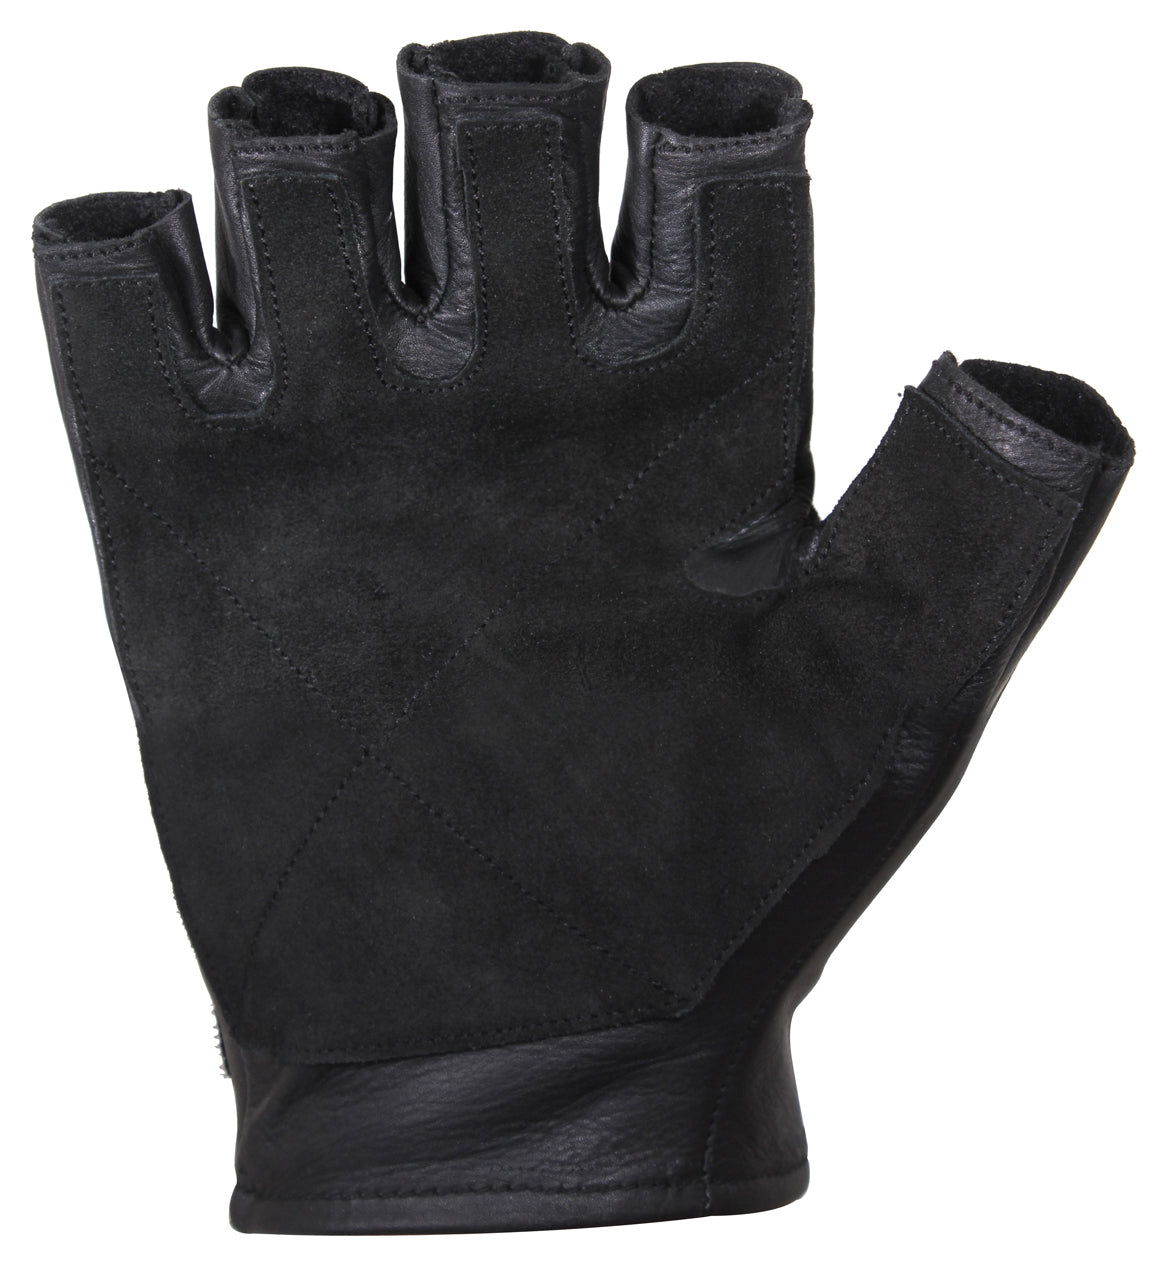 Rothco Fingerless Padded Tactical Gloves Tactical Gear Australia Supplier Distributor Dealer